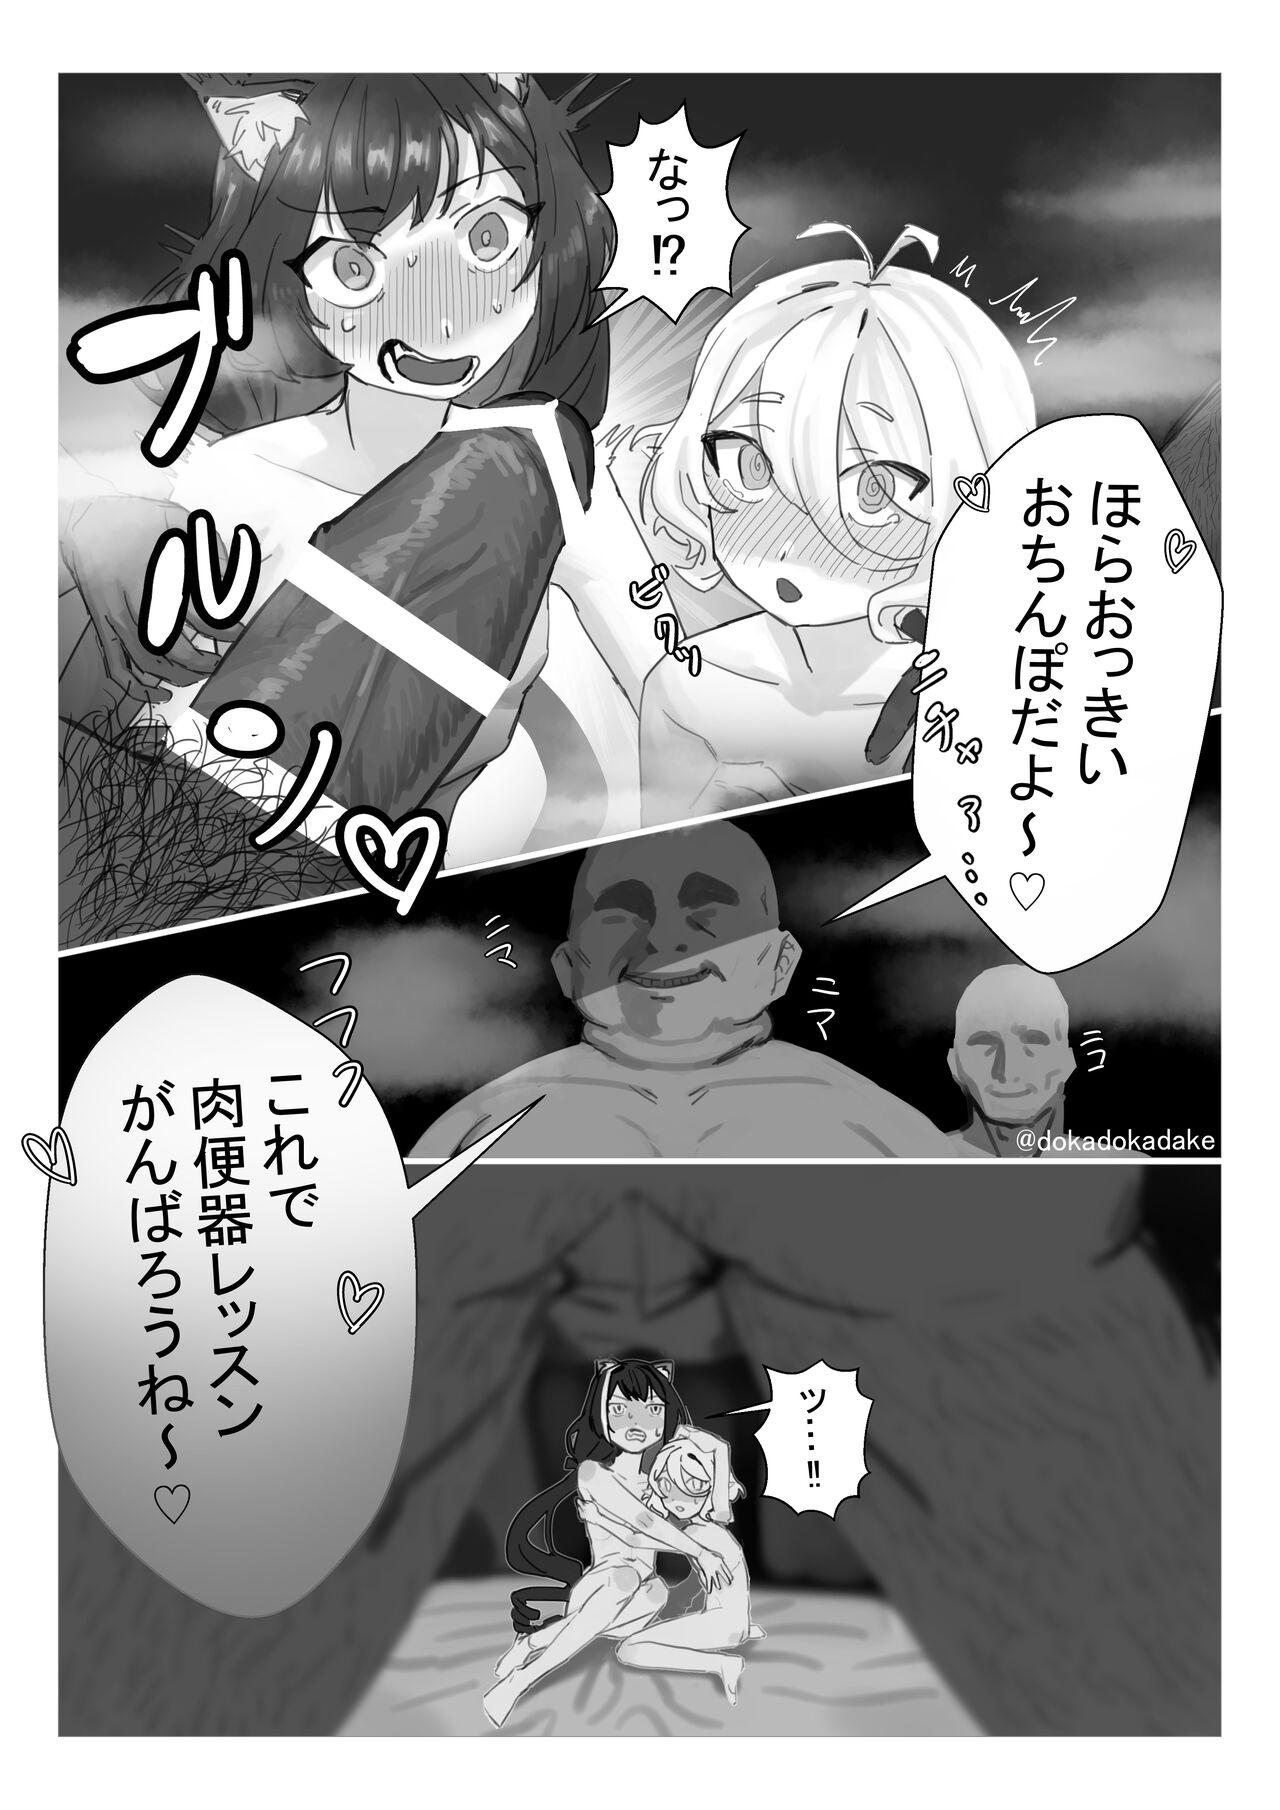 Work プリコネ輪姦NTR漫画 - Princess connect Chudai - Picture 3